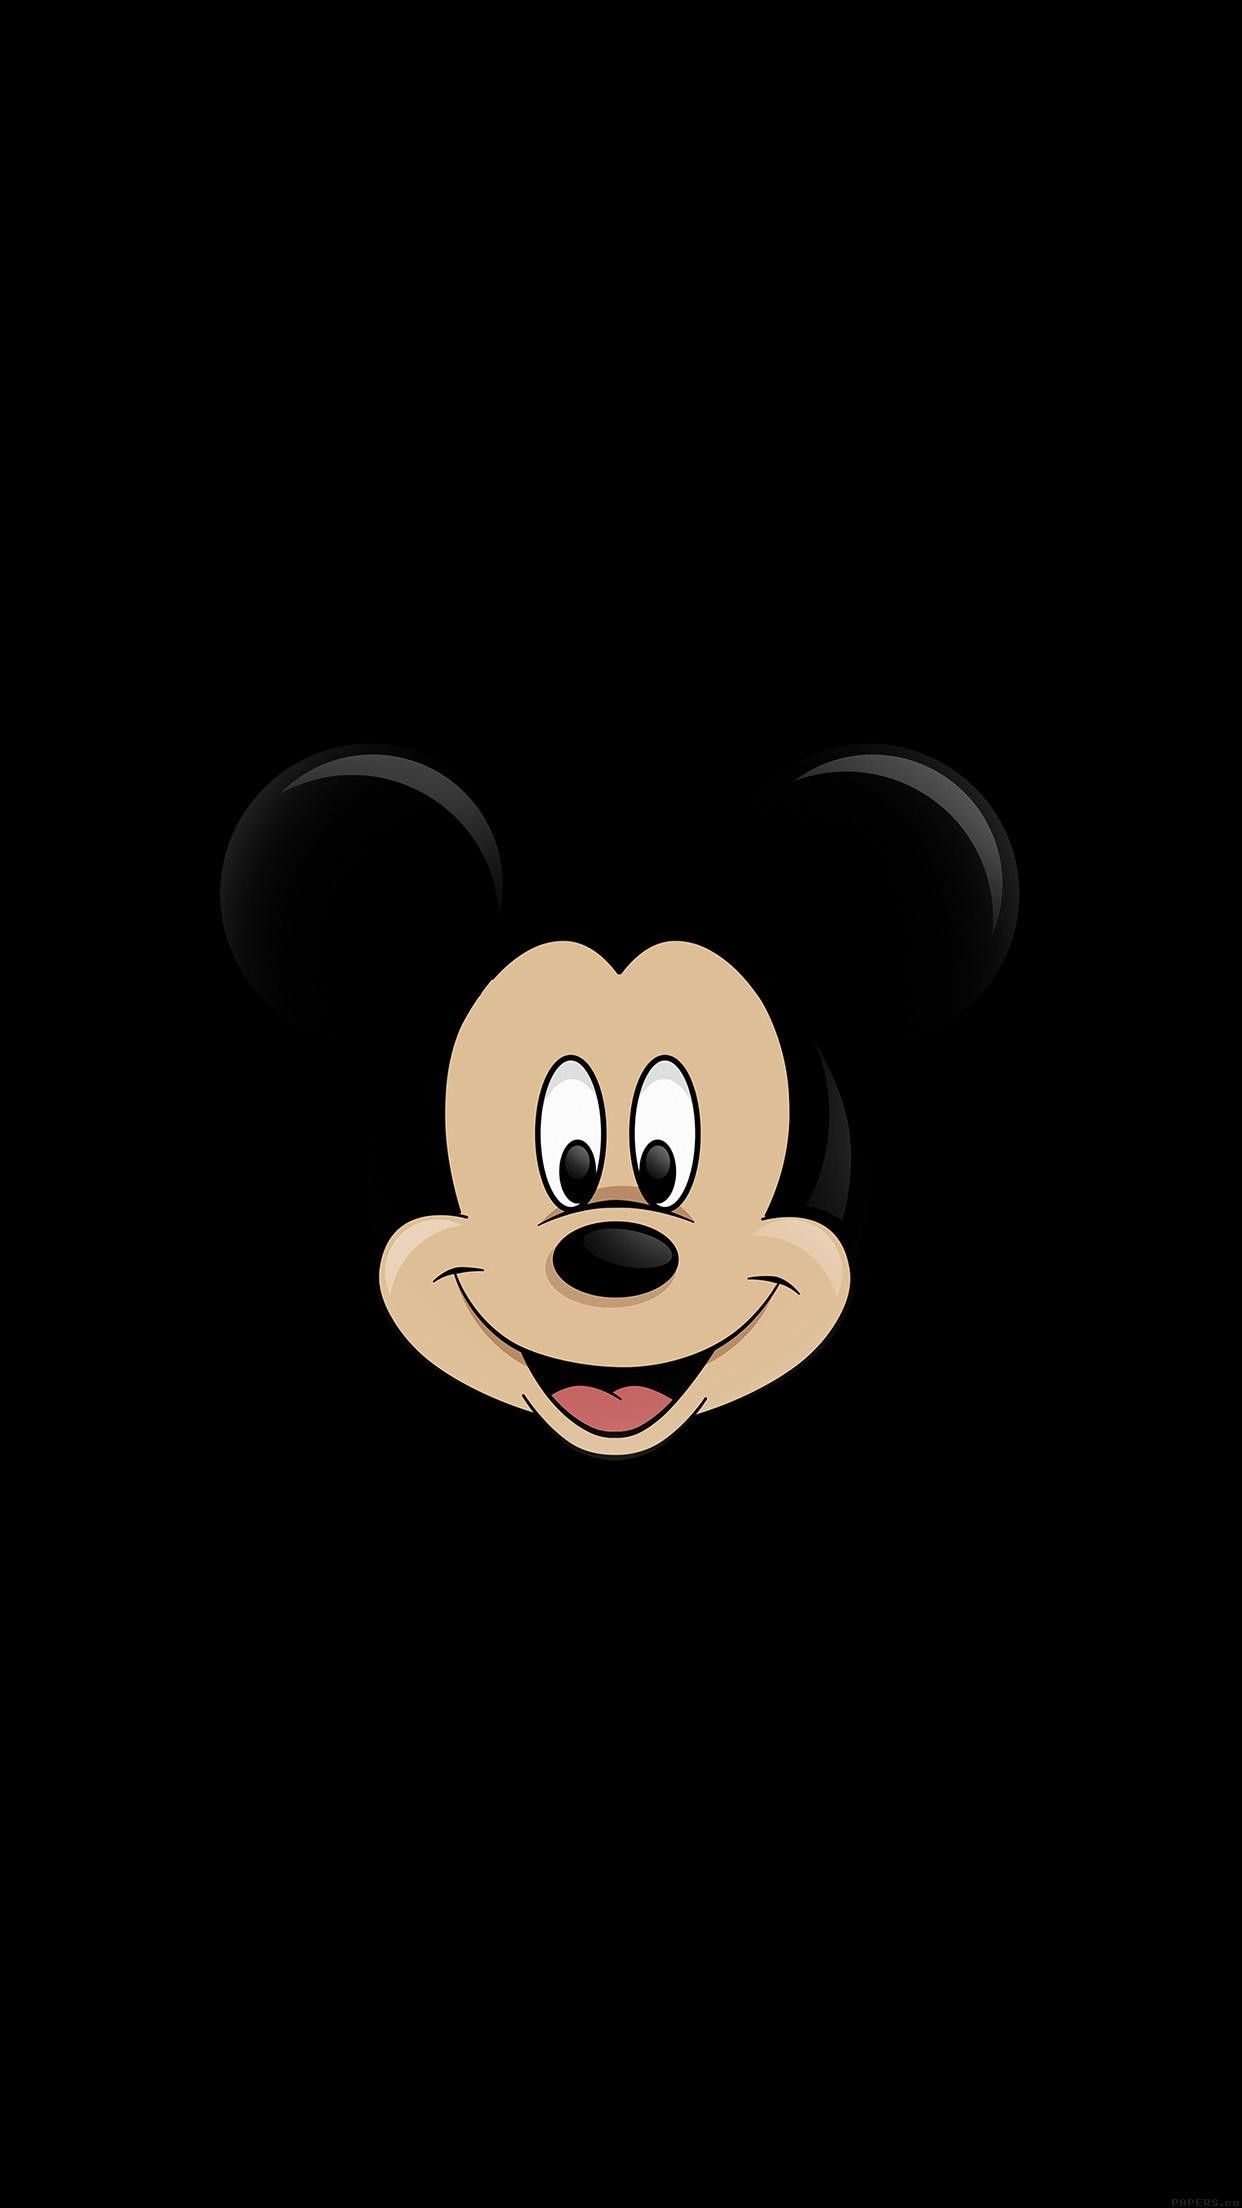 Mickey Mouse Dark Logo Disney. Mickey mouse wallpaper iphone, Mickey mouse wallpaper, Cartoon wallpaper iphone